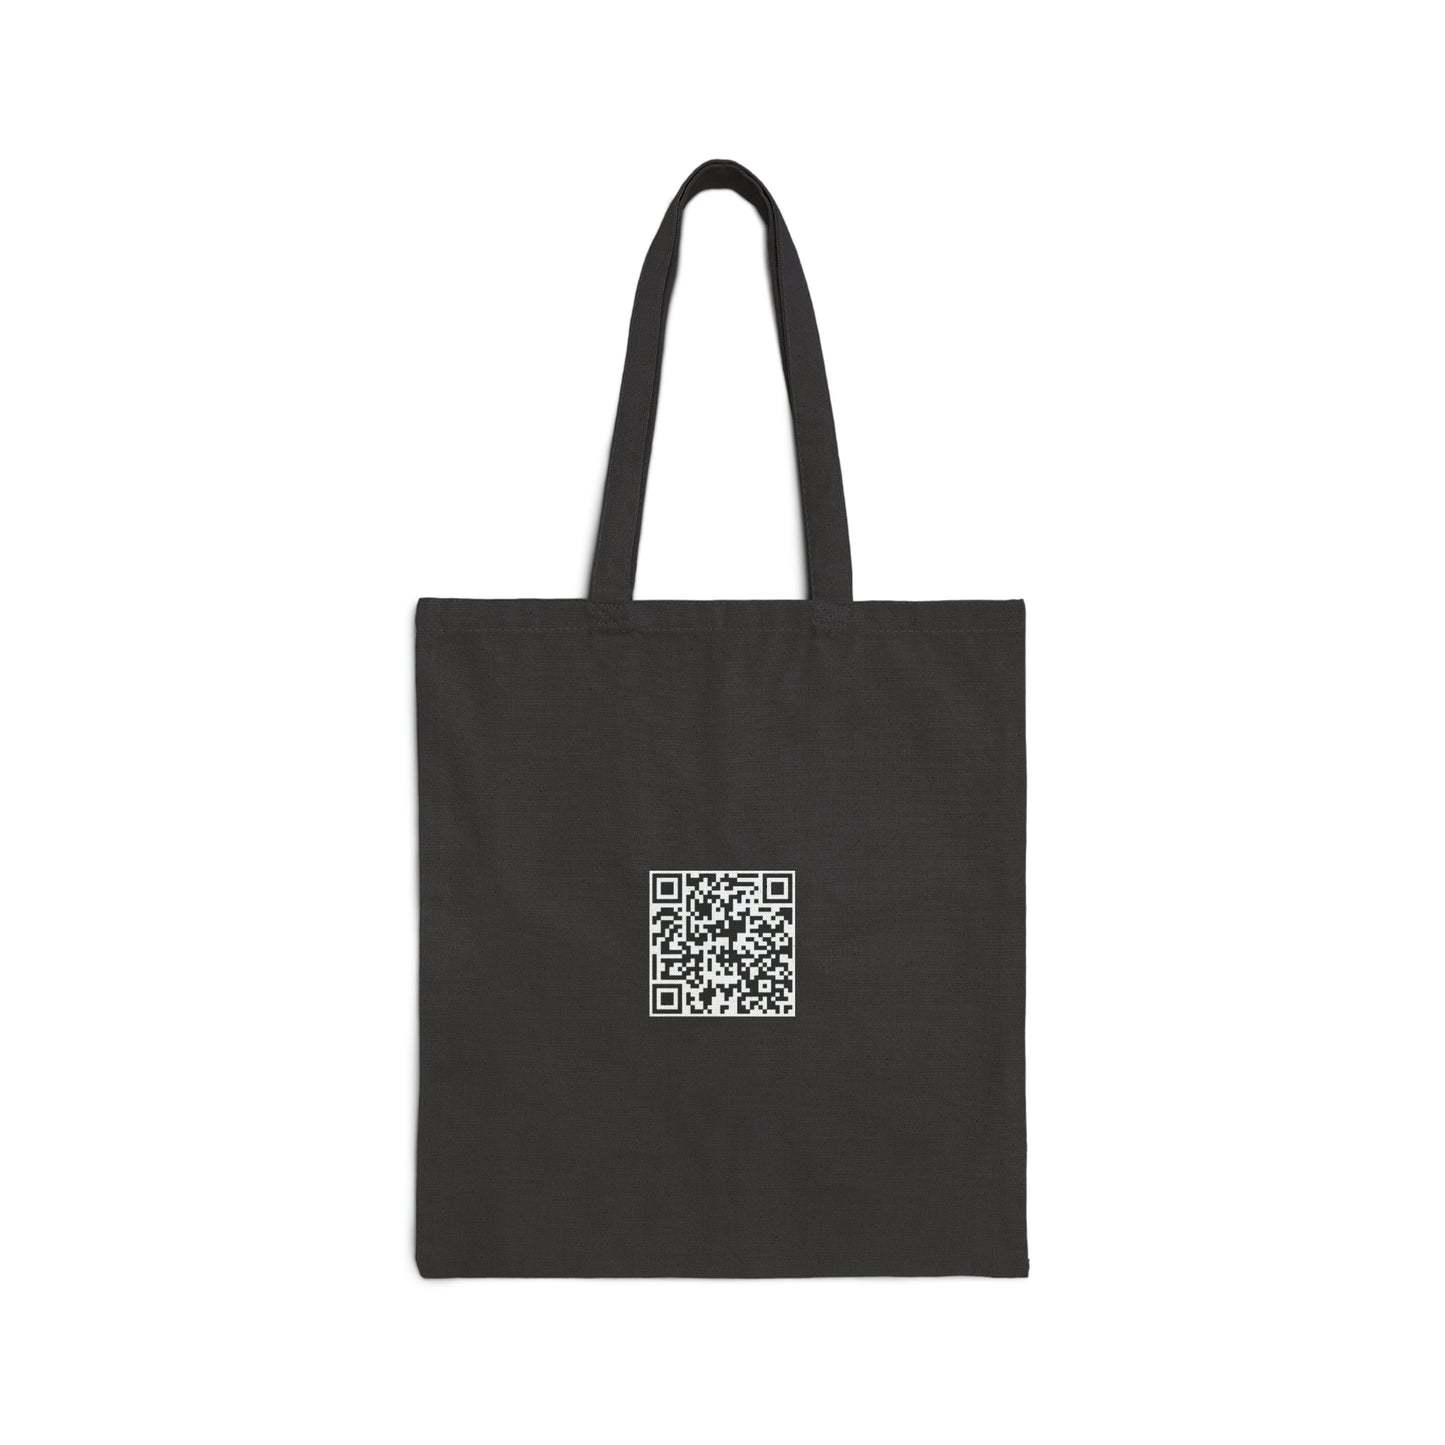 Blurred Vision - Cotton Canvas Tote Bag